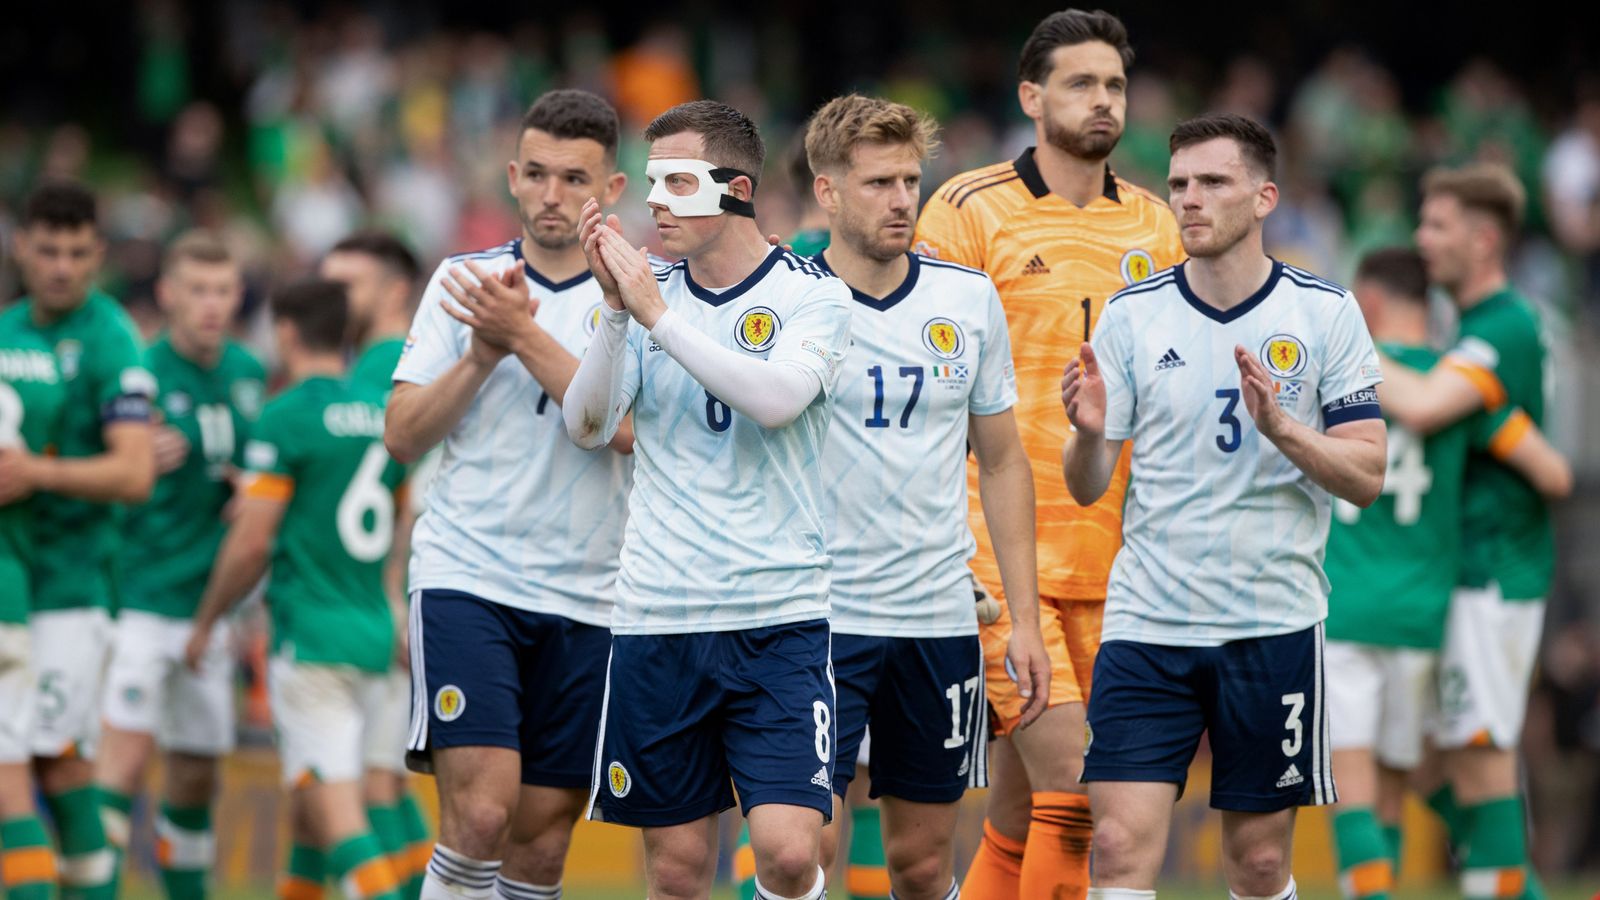 Scotland: Steve Clarke admits Ireland defeat was a ‘head scratcher’ as he accepts criticism will come